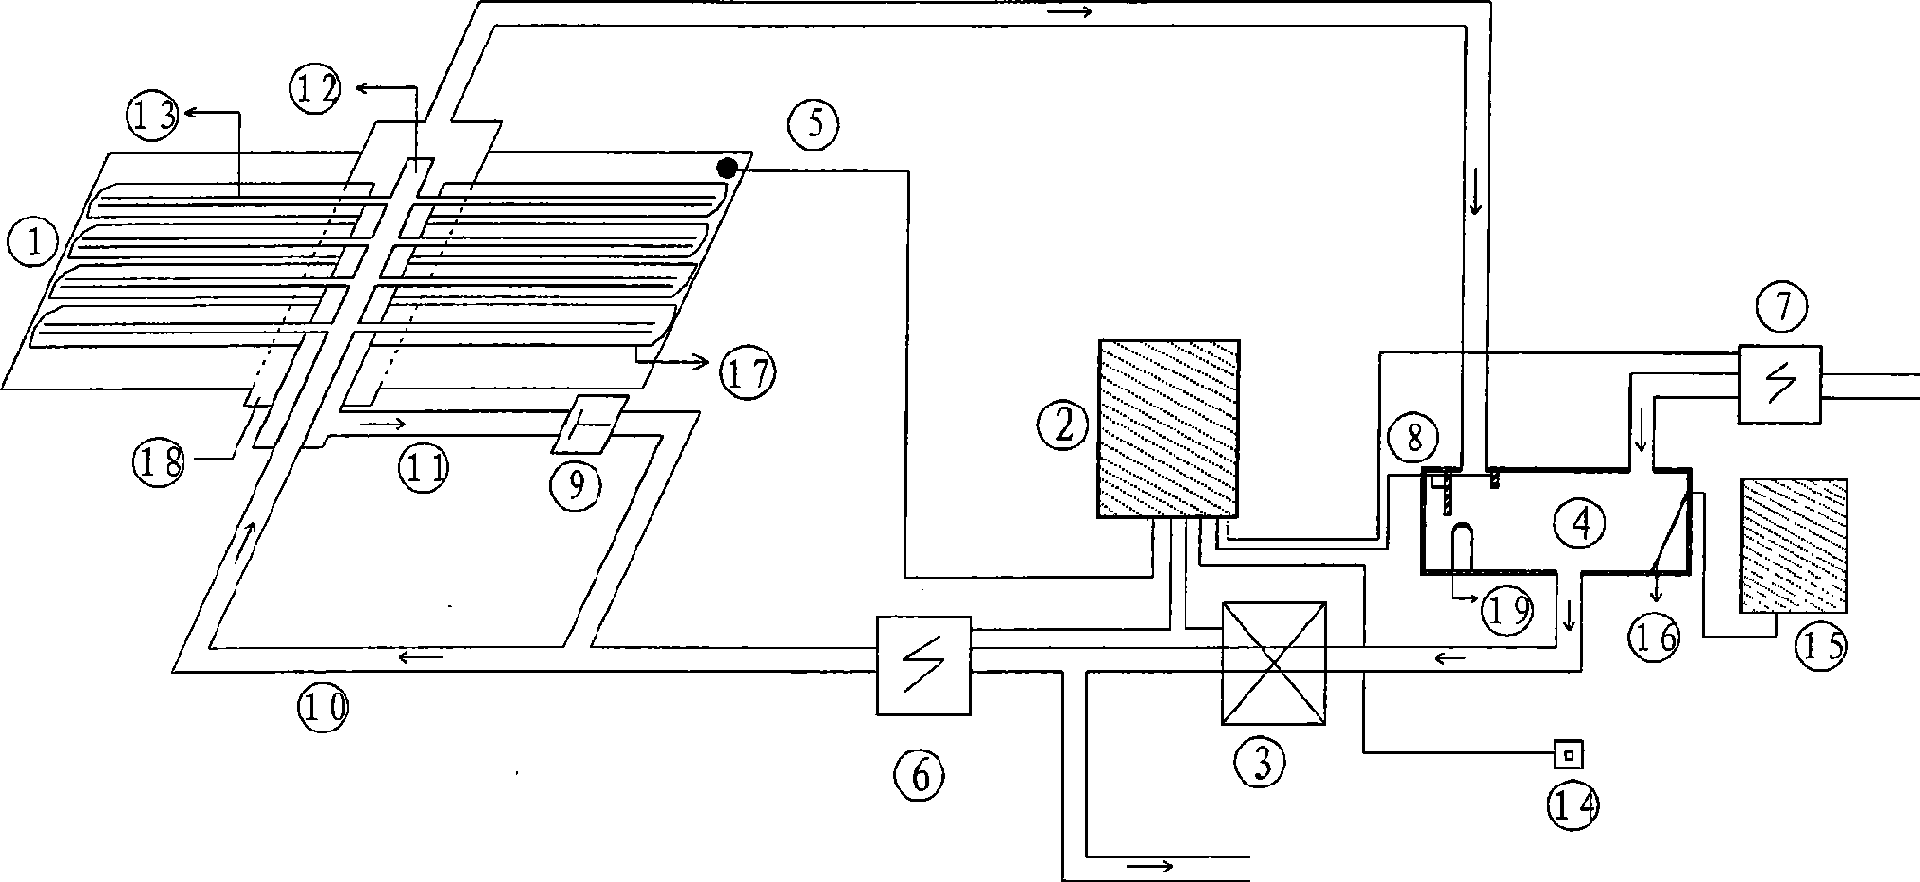 Light-operated non-beating split type solar water heater